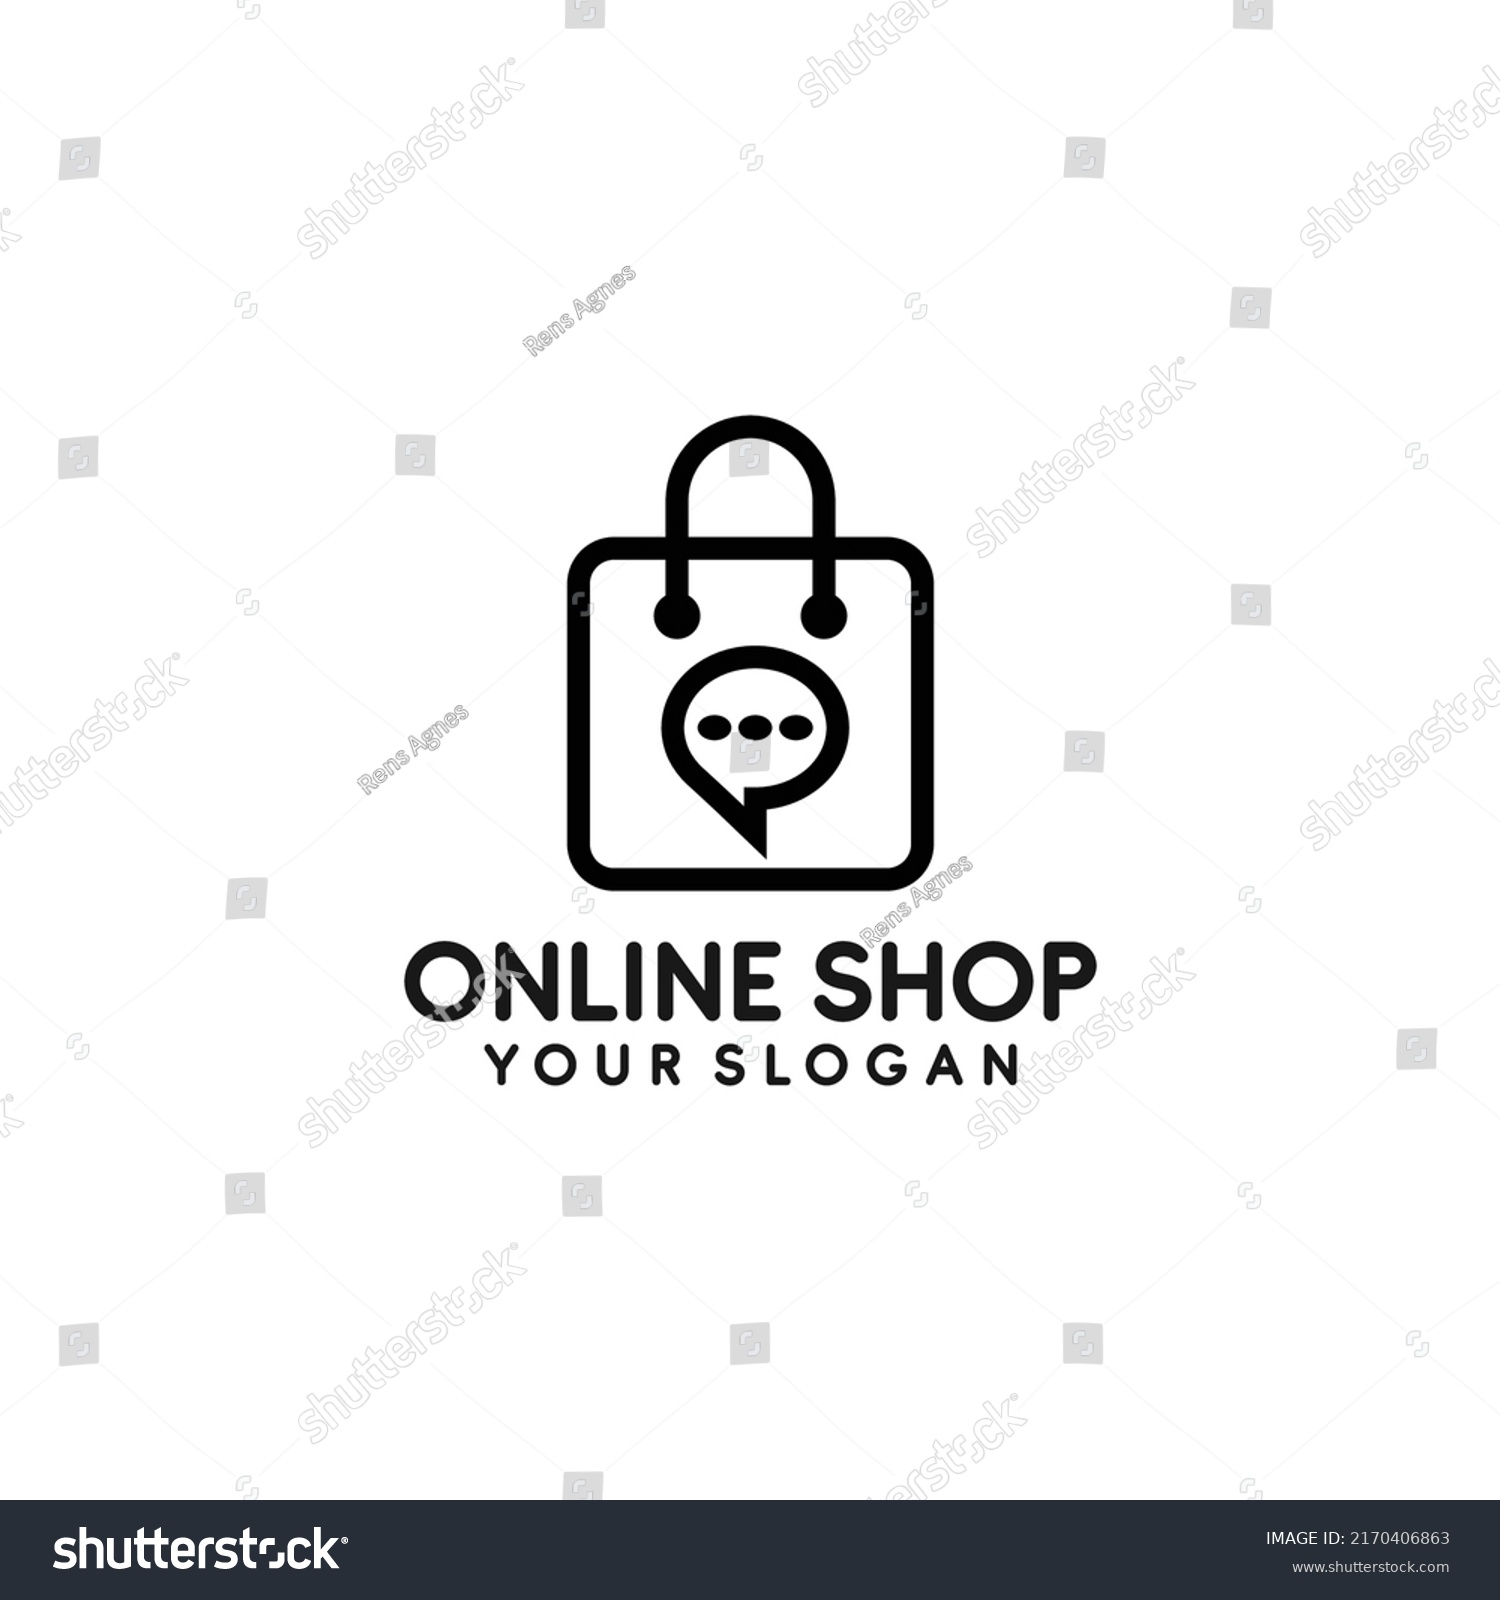 Online Shop Logo Designs Template Shopping Stock Vector (Royalty Free ...